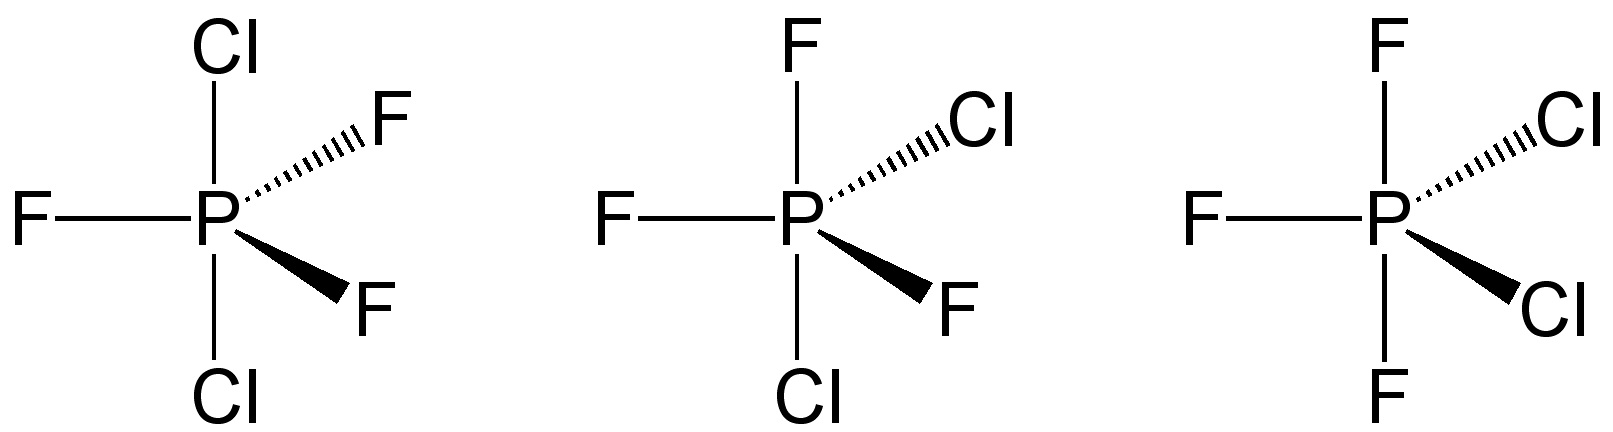 Уксусная кислота pcl5. Pcl2f3. Схема образования молекул pcl3. Pcl5 структурная формула. Альдегид и pcl5.